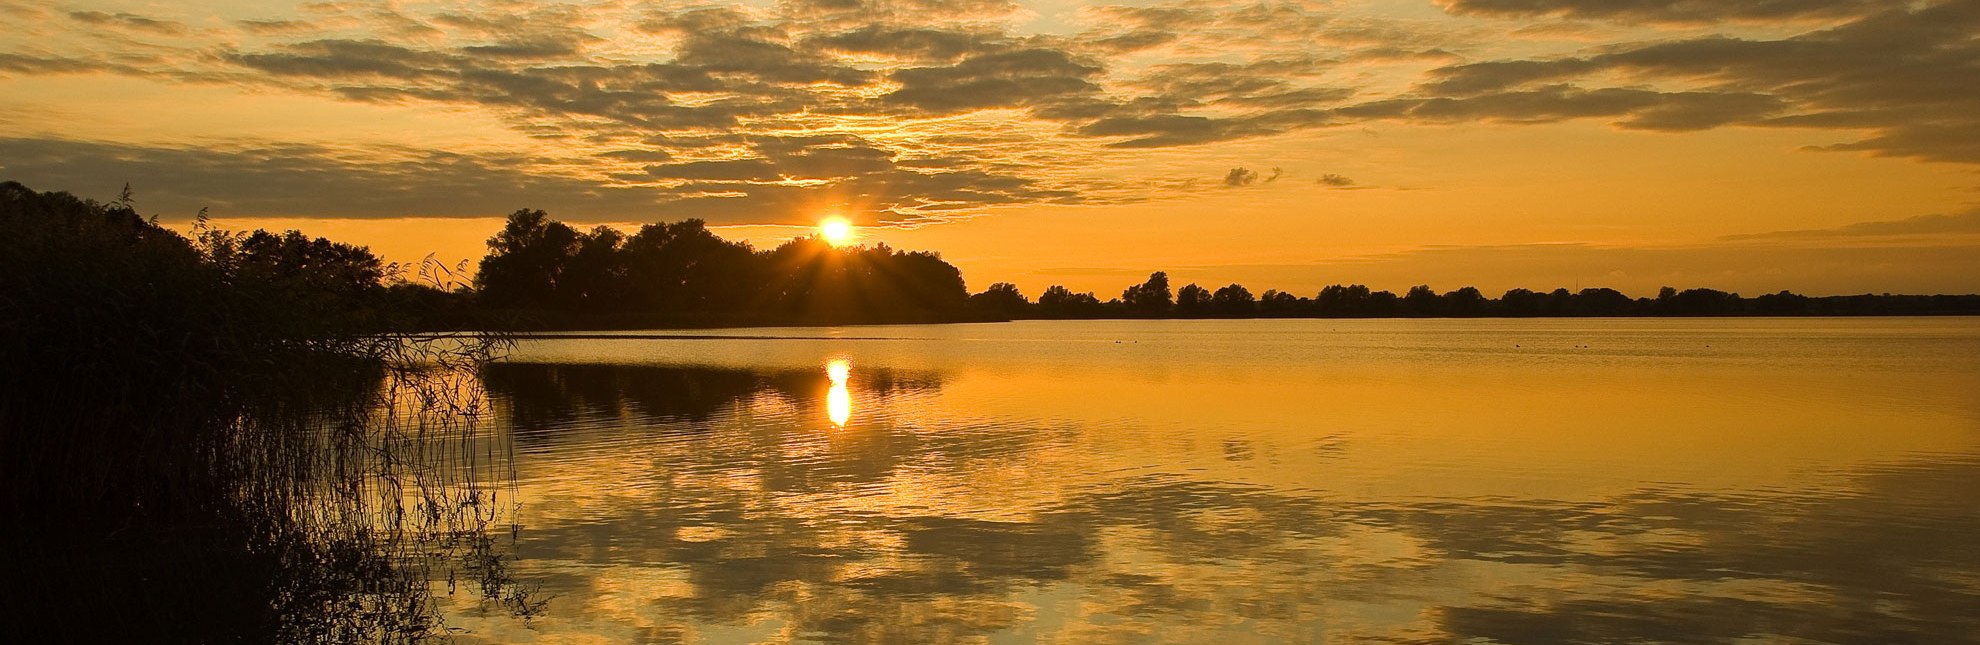 Goldener Sonnenuntergang am Mechower See., © Thomas Ebelt / HLMS GmbH